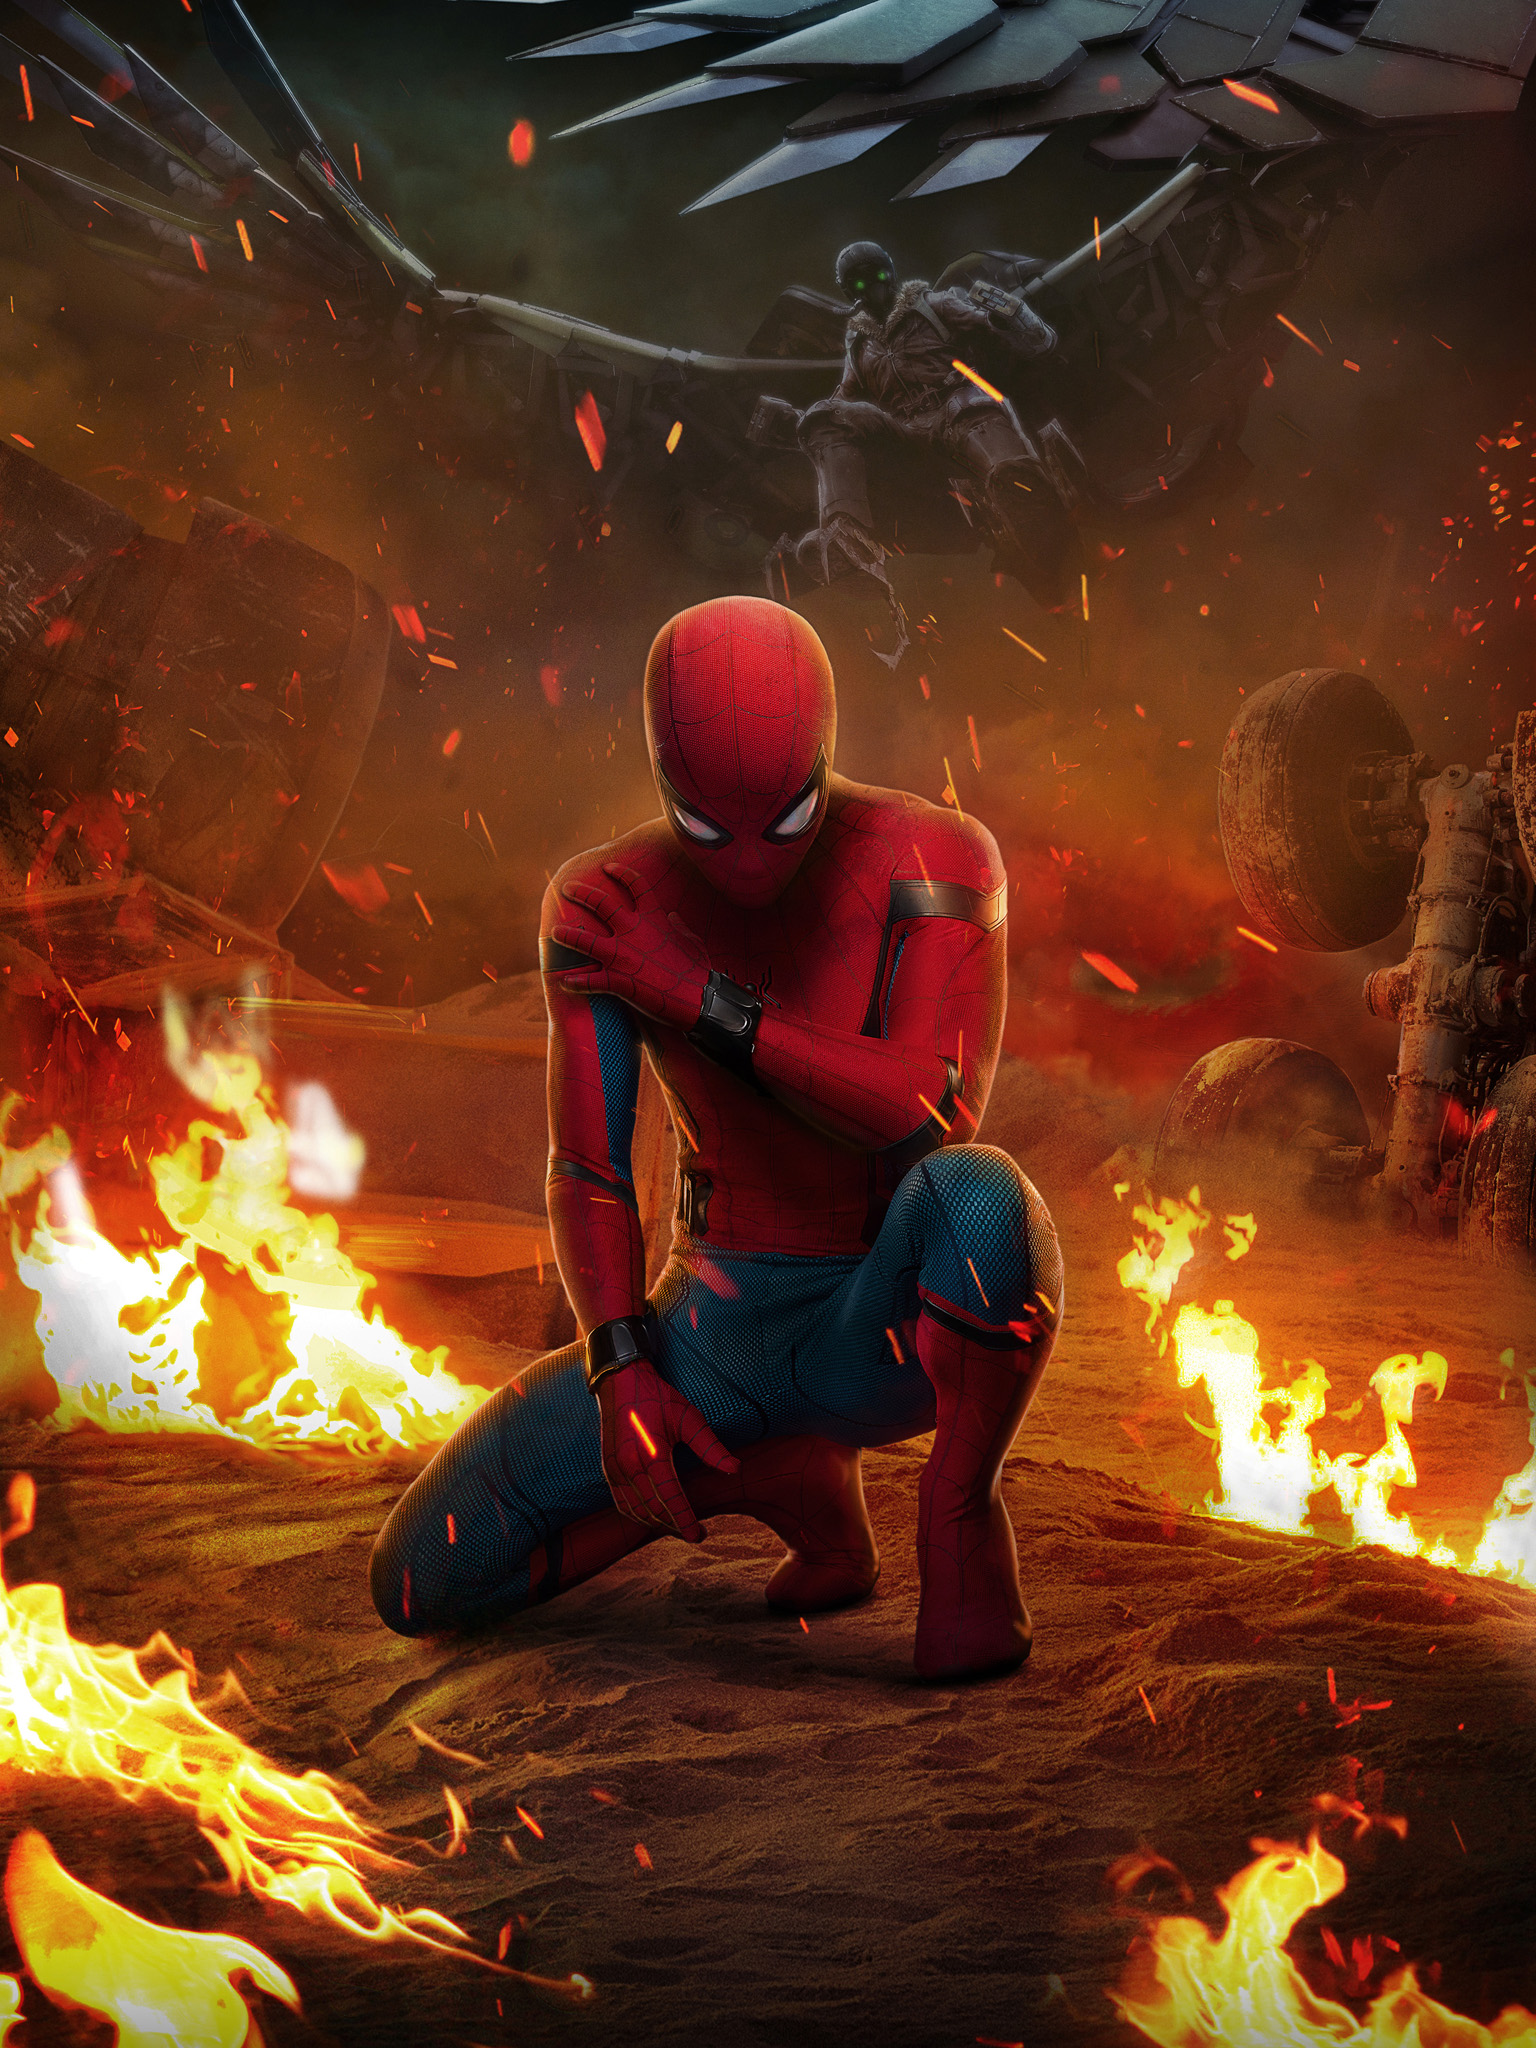 General 1536x2048 Spider-Man: Homecoming Peter Parker movies superhero portrait display